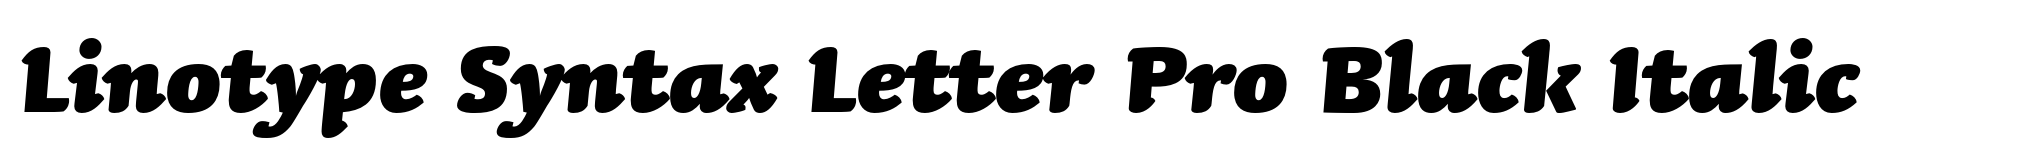 Linotype Syntax Letter Pro Black Italic image